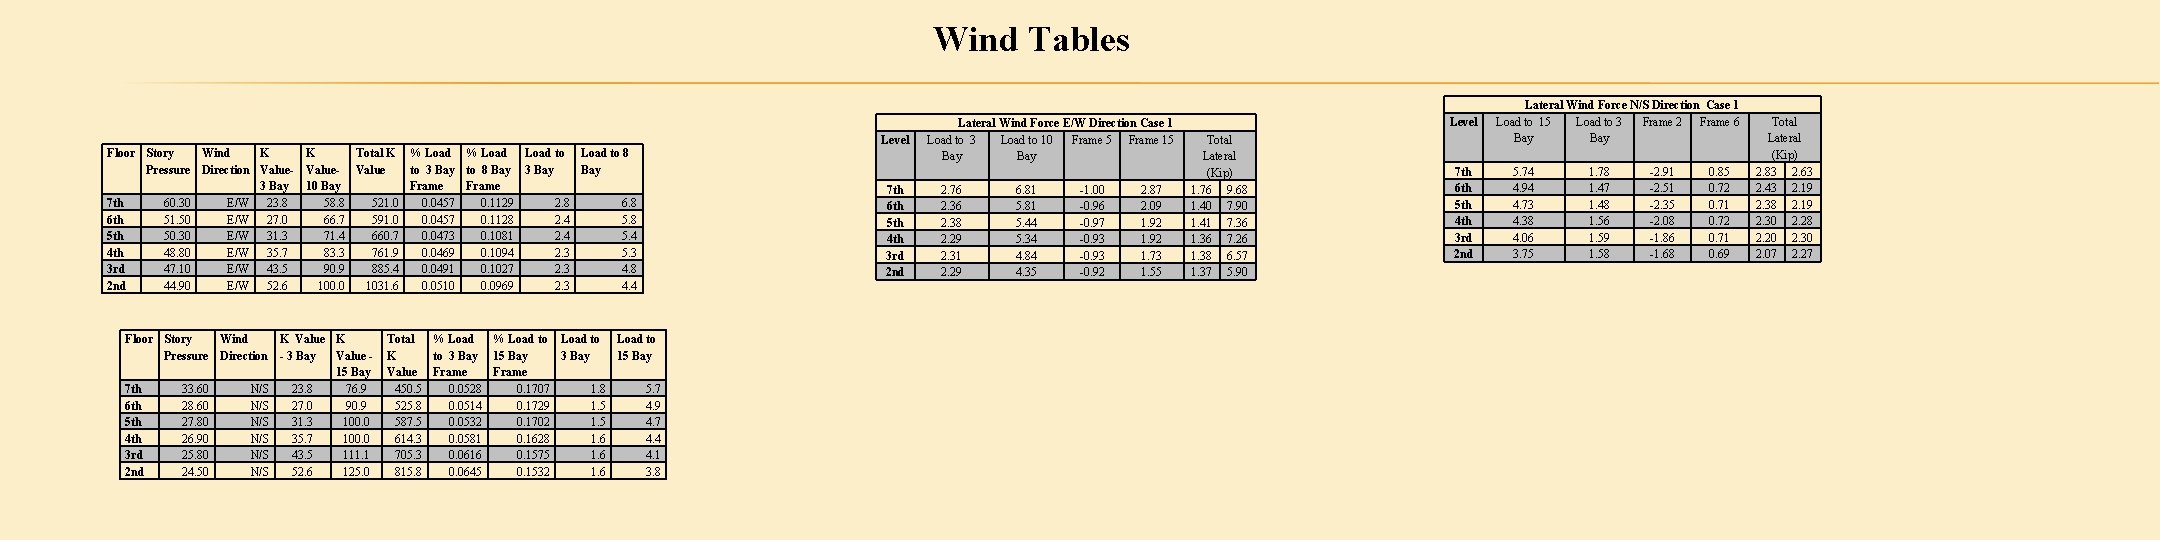 Wind Tables Level Floor Story Wind K K Total K % Load to 8